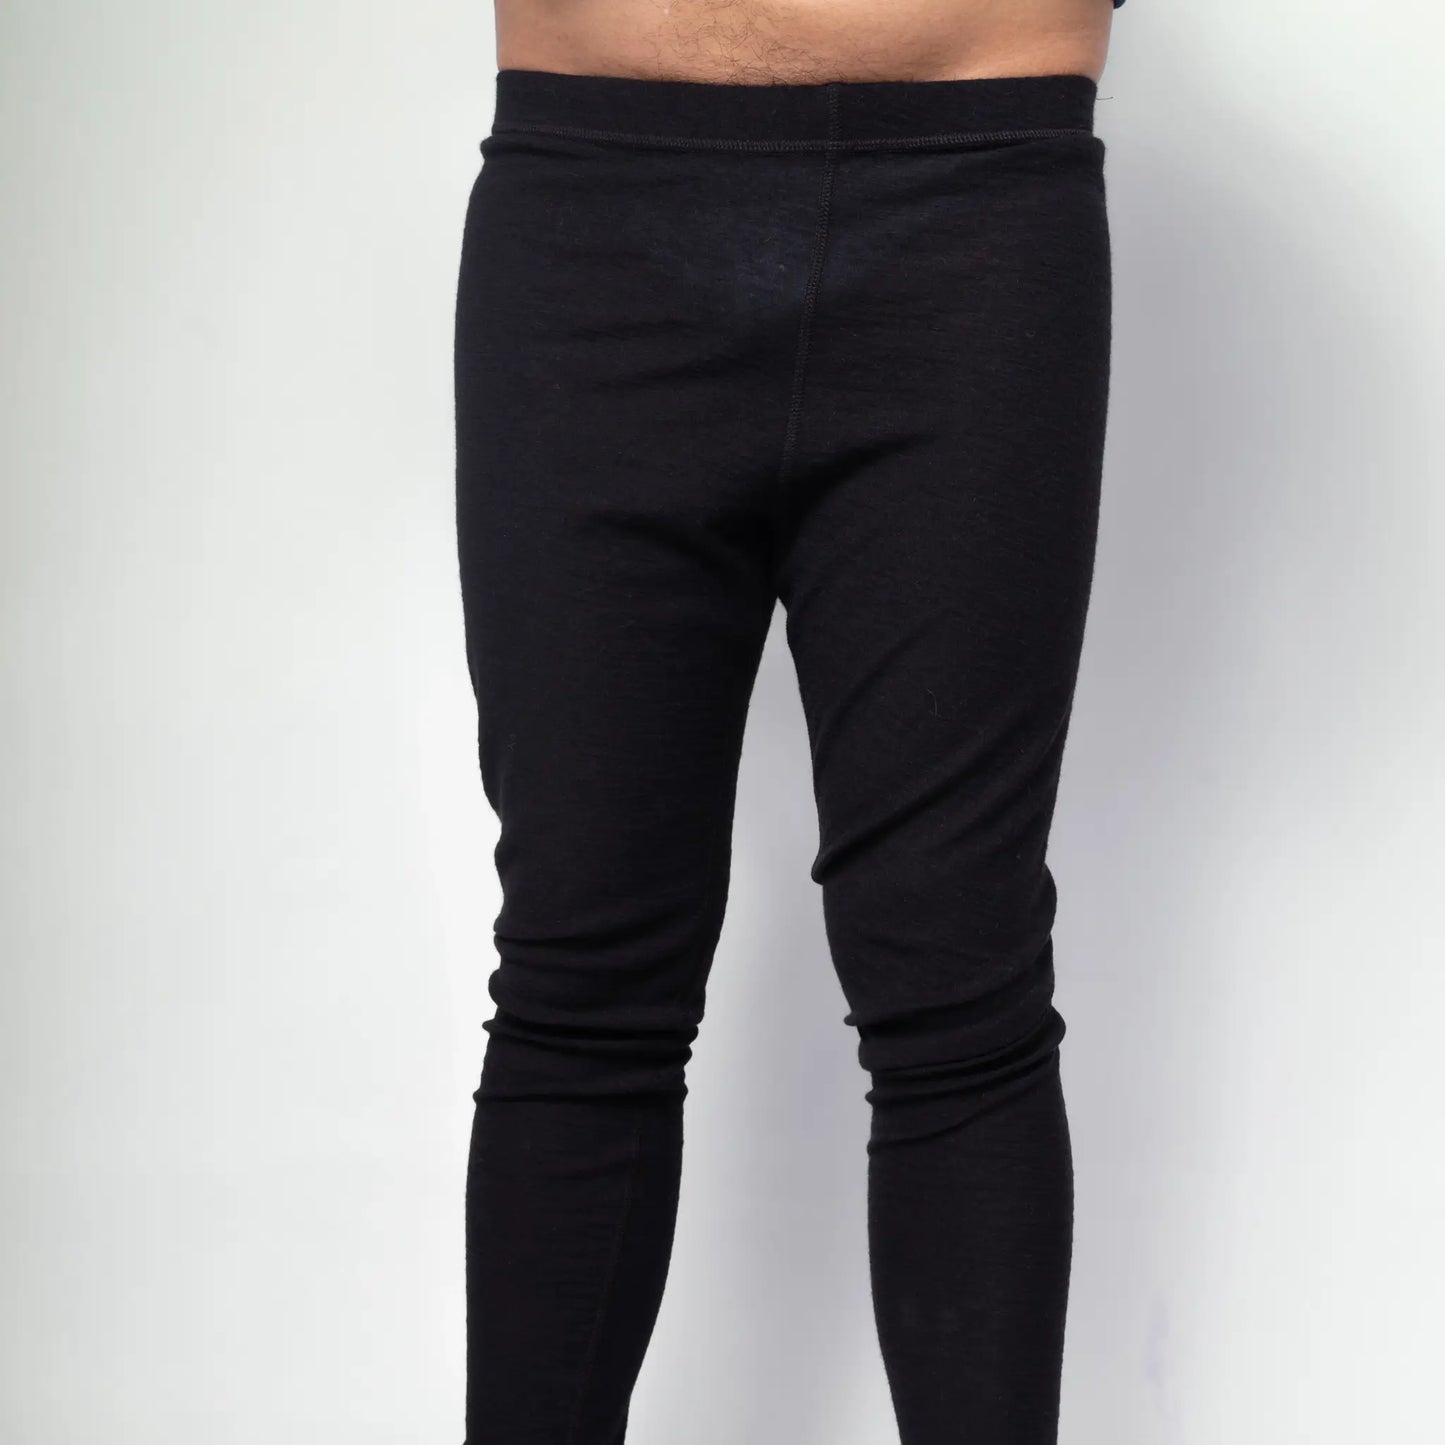 mens leggings ultralight160 functional color black